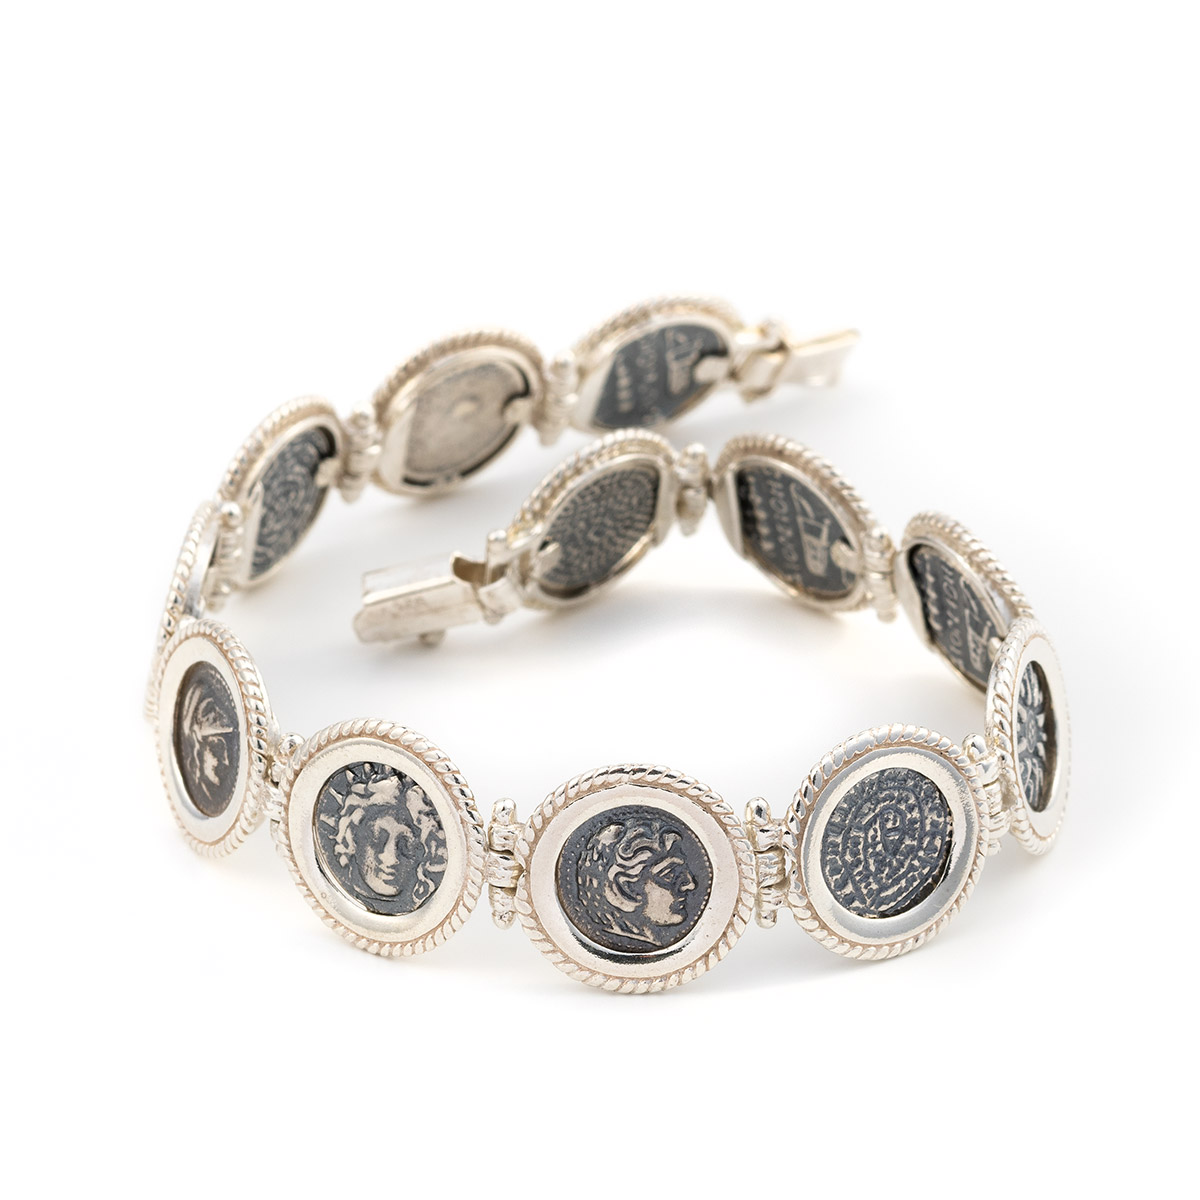 Bracelet with Ancient Greek symbols - Sterling Silver - GREEK ROOTS